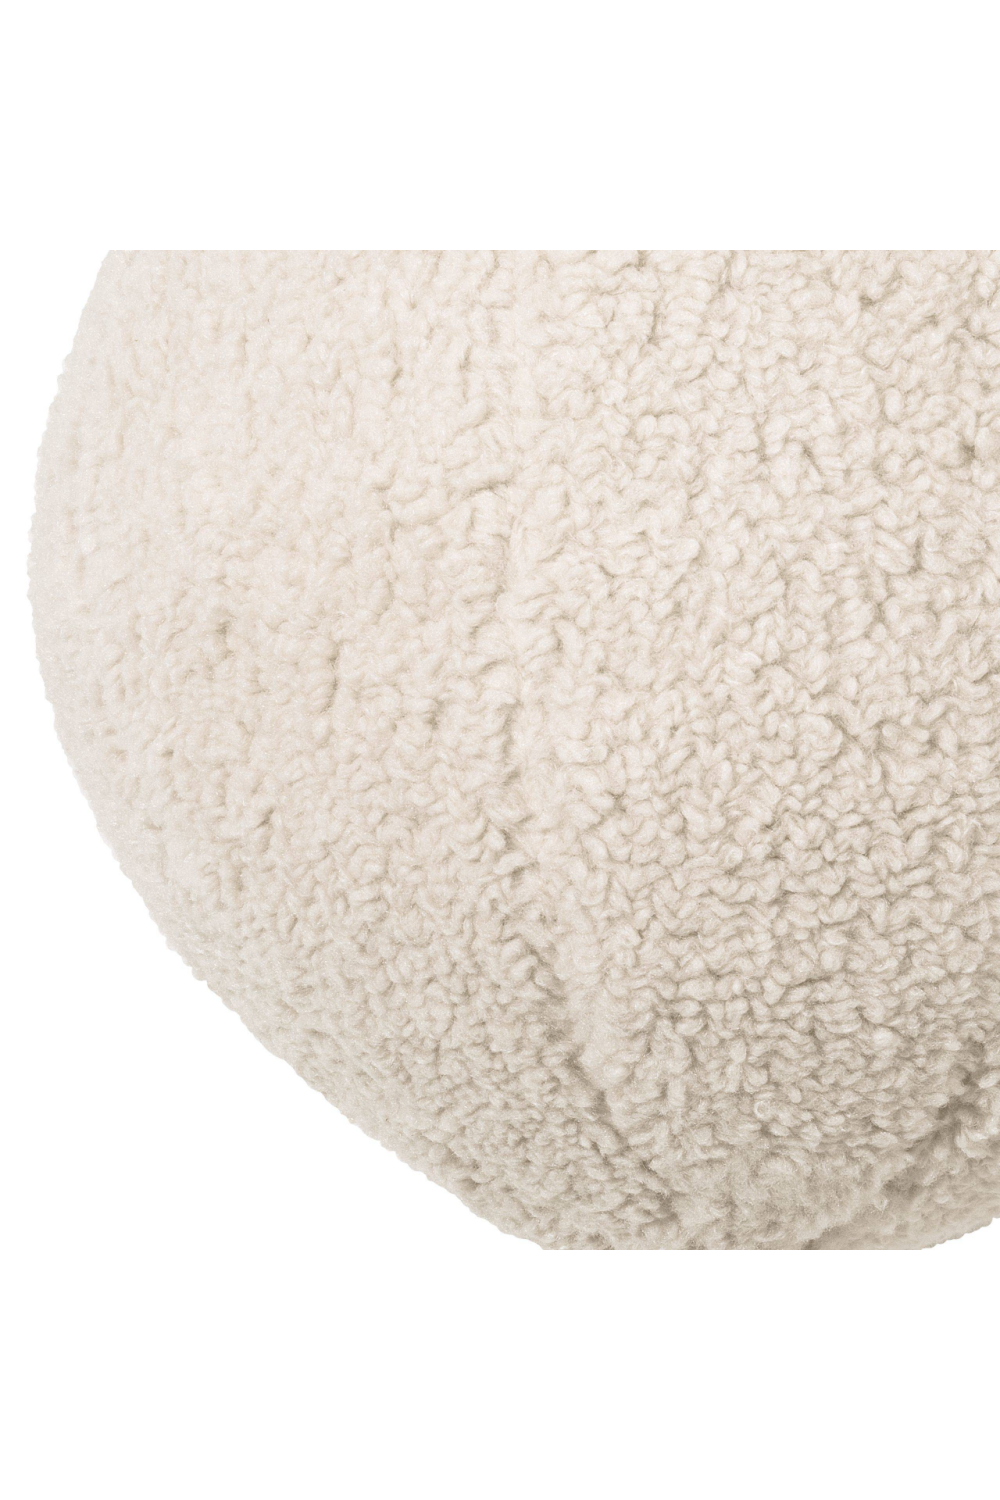 Brisbane Cream Ball Pillow | Eichholtz Palla L | OROA